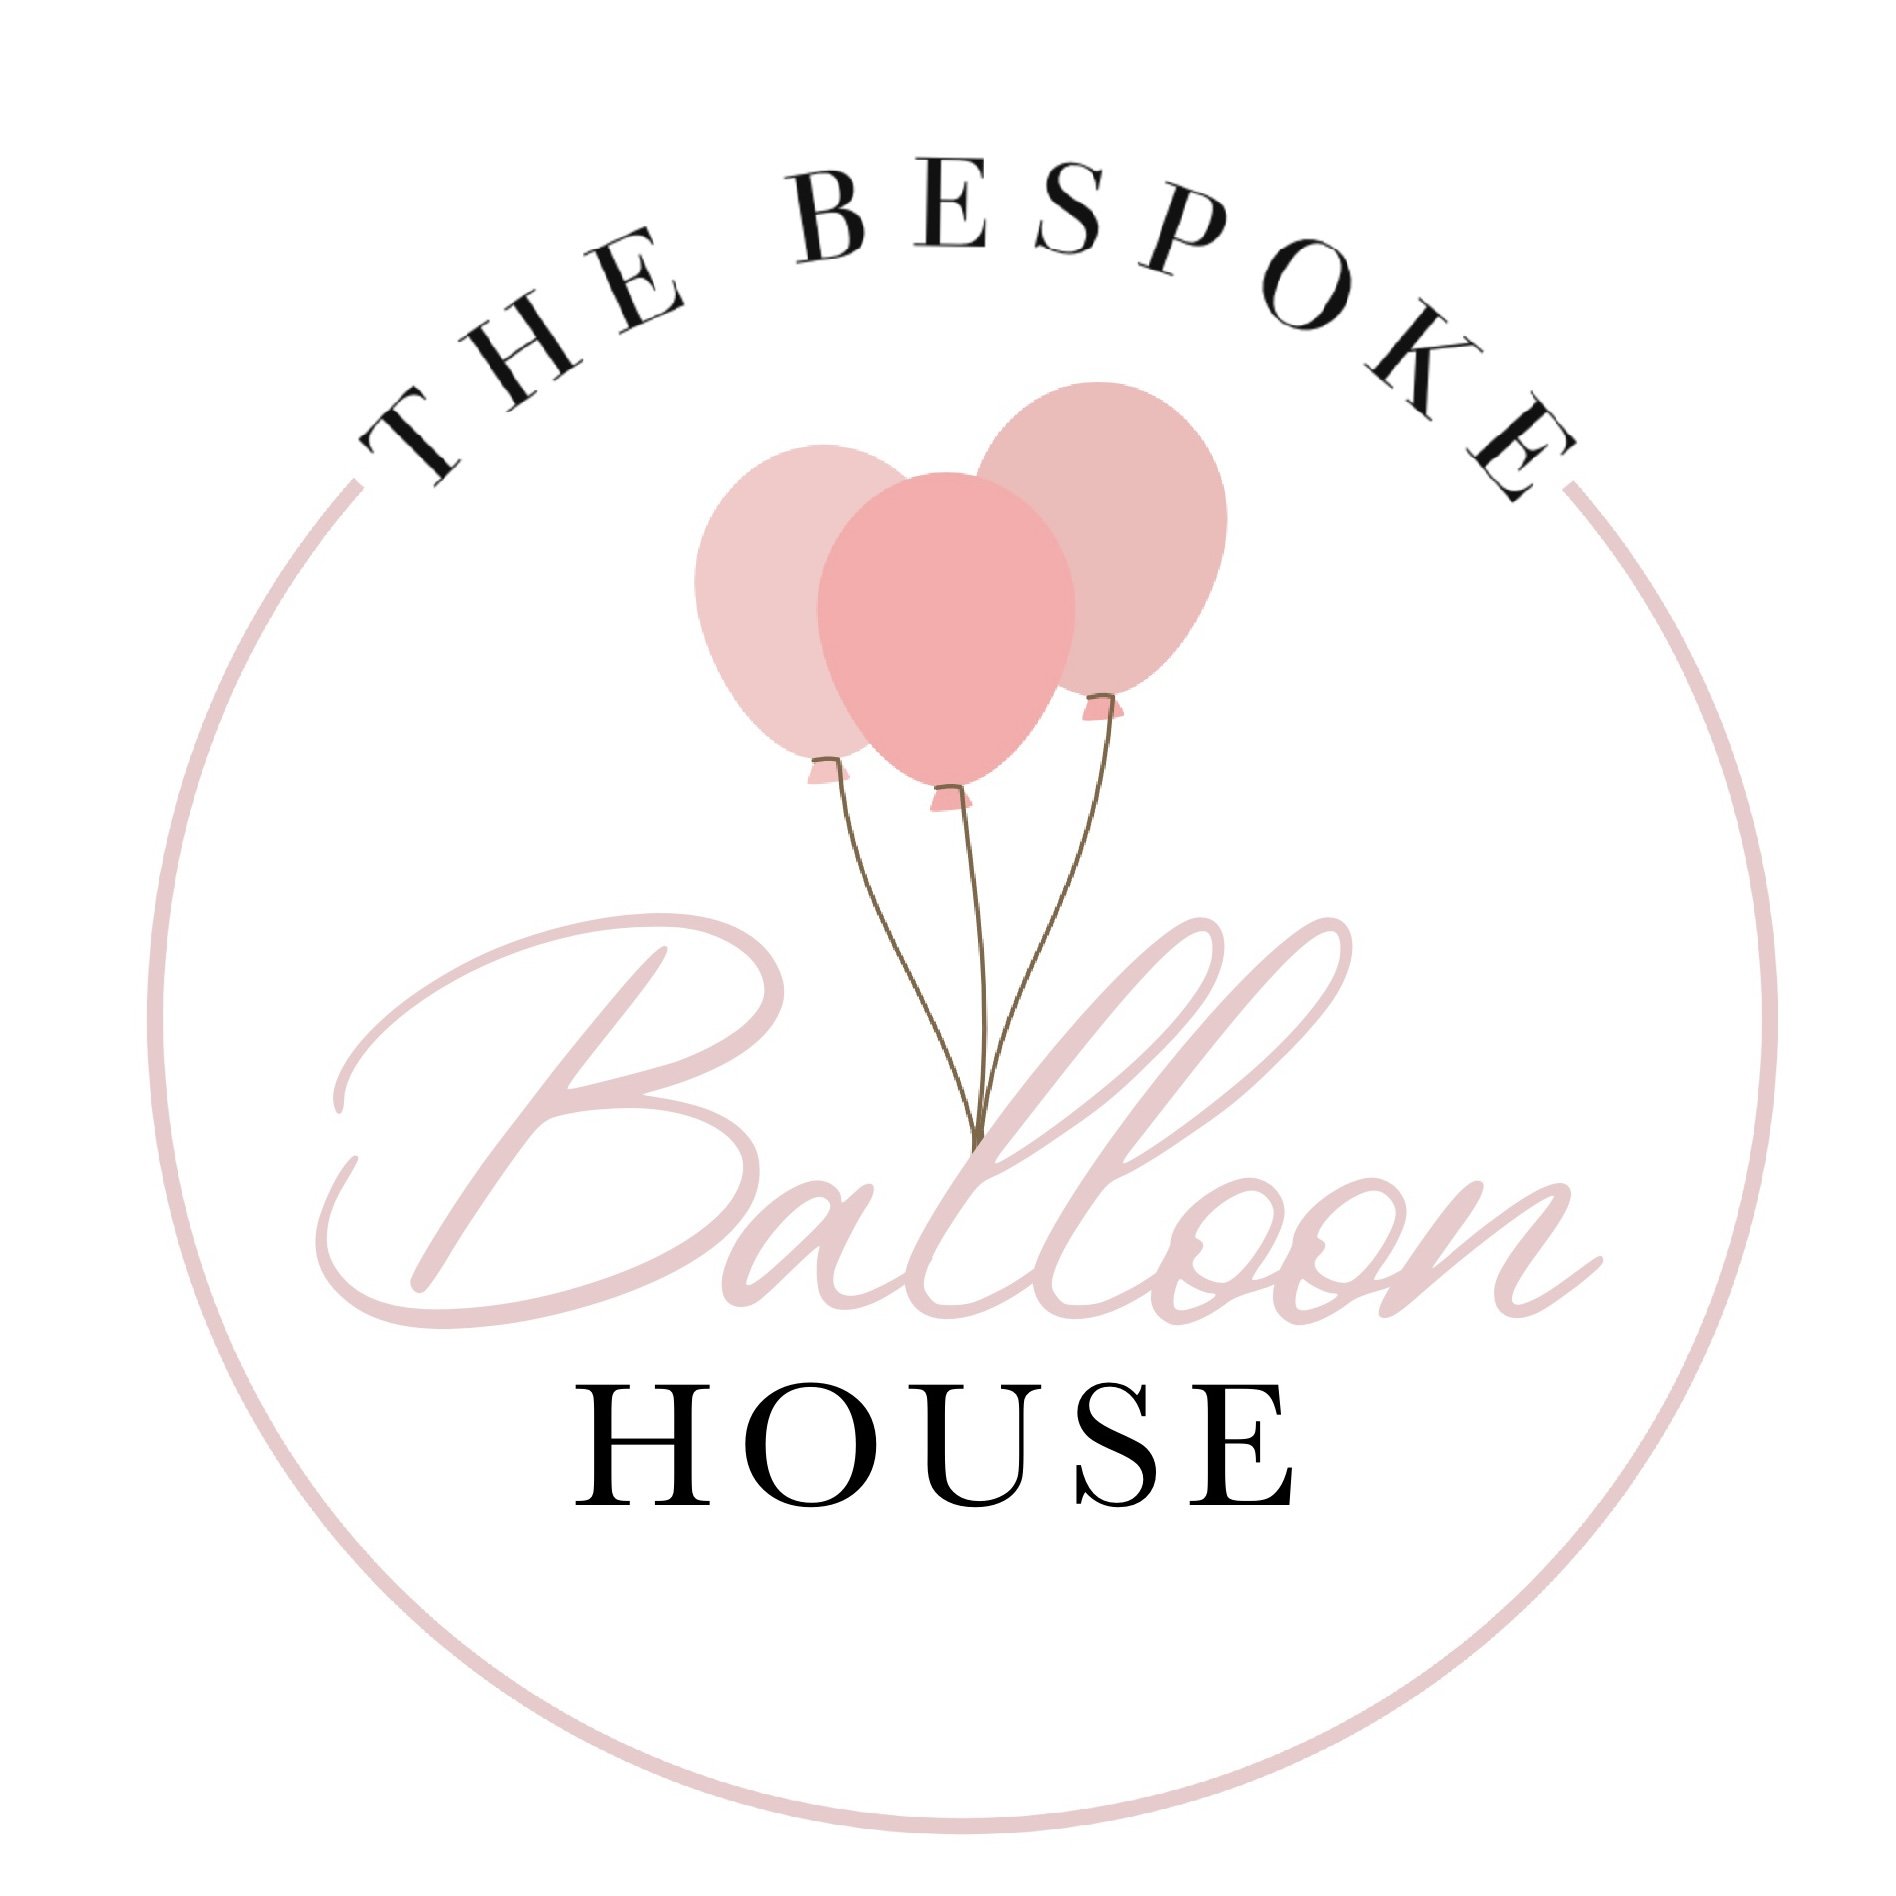 The Bespoke Balloon House